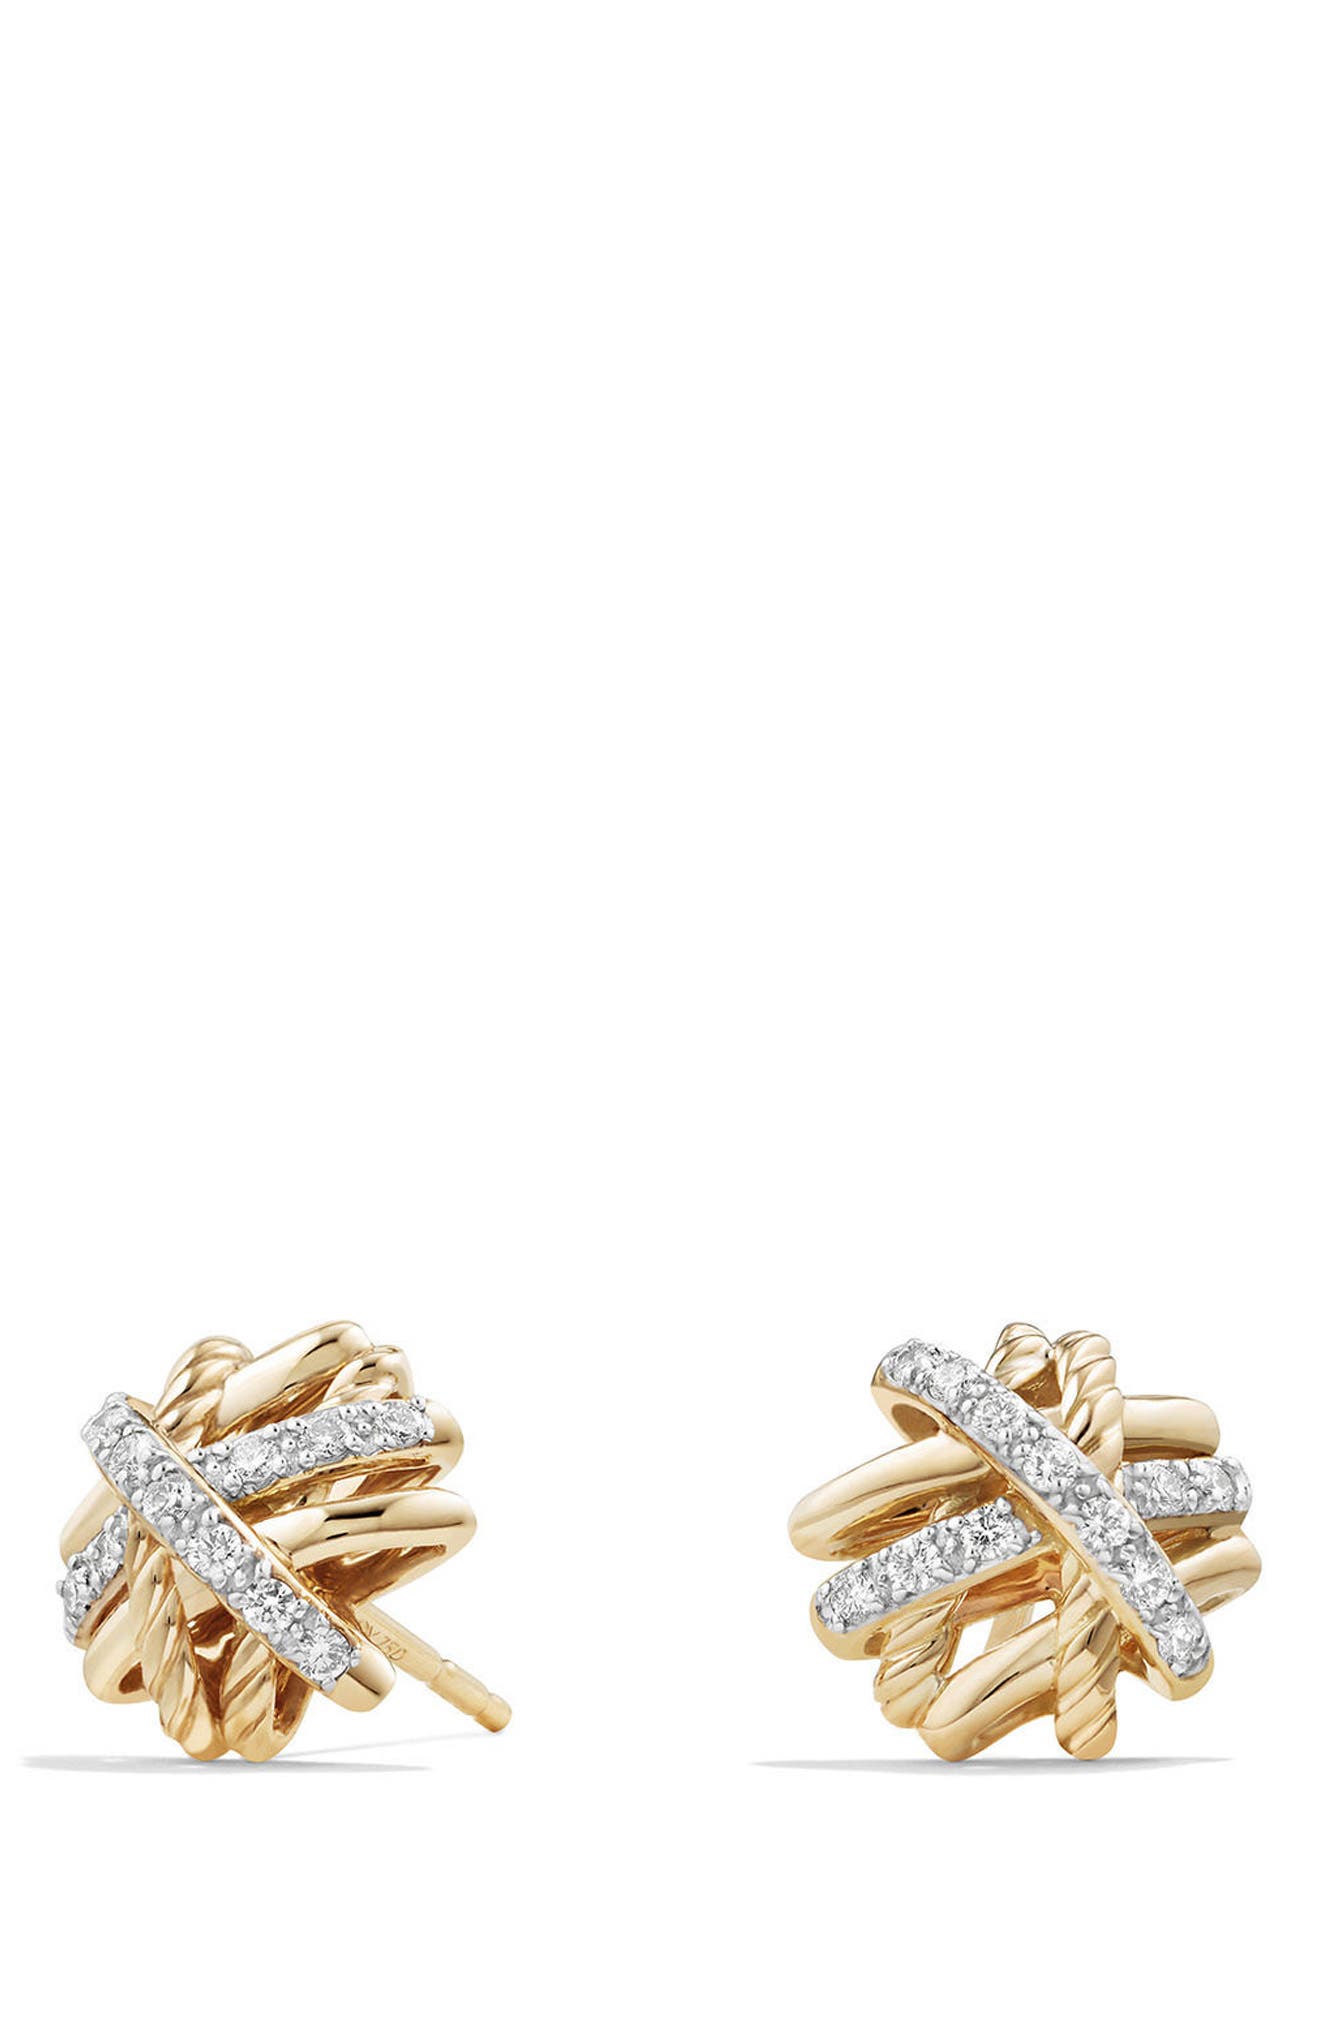 David Yurman Crossover Stud Earrings with Diamonds in 18k Gold in Yellow Gold/Diamond